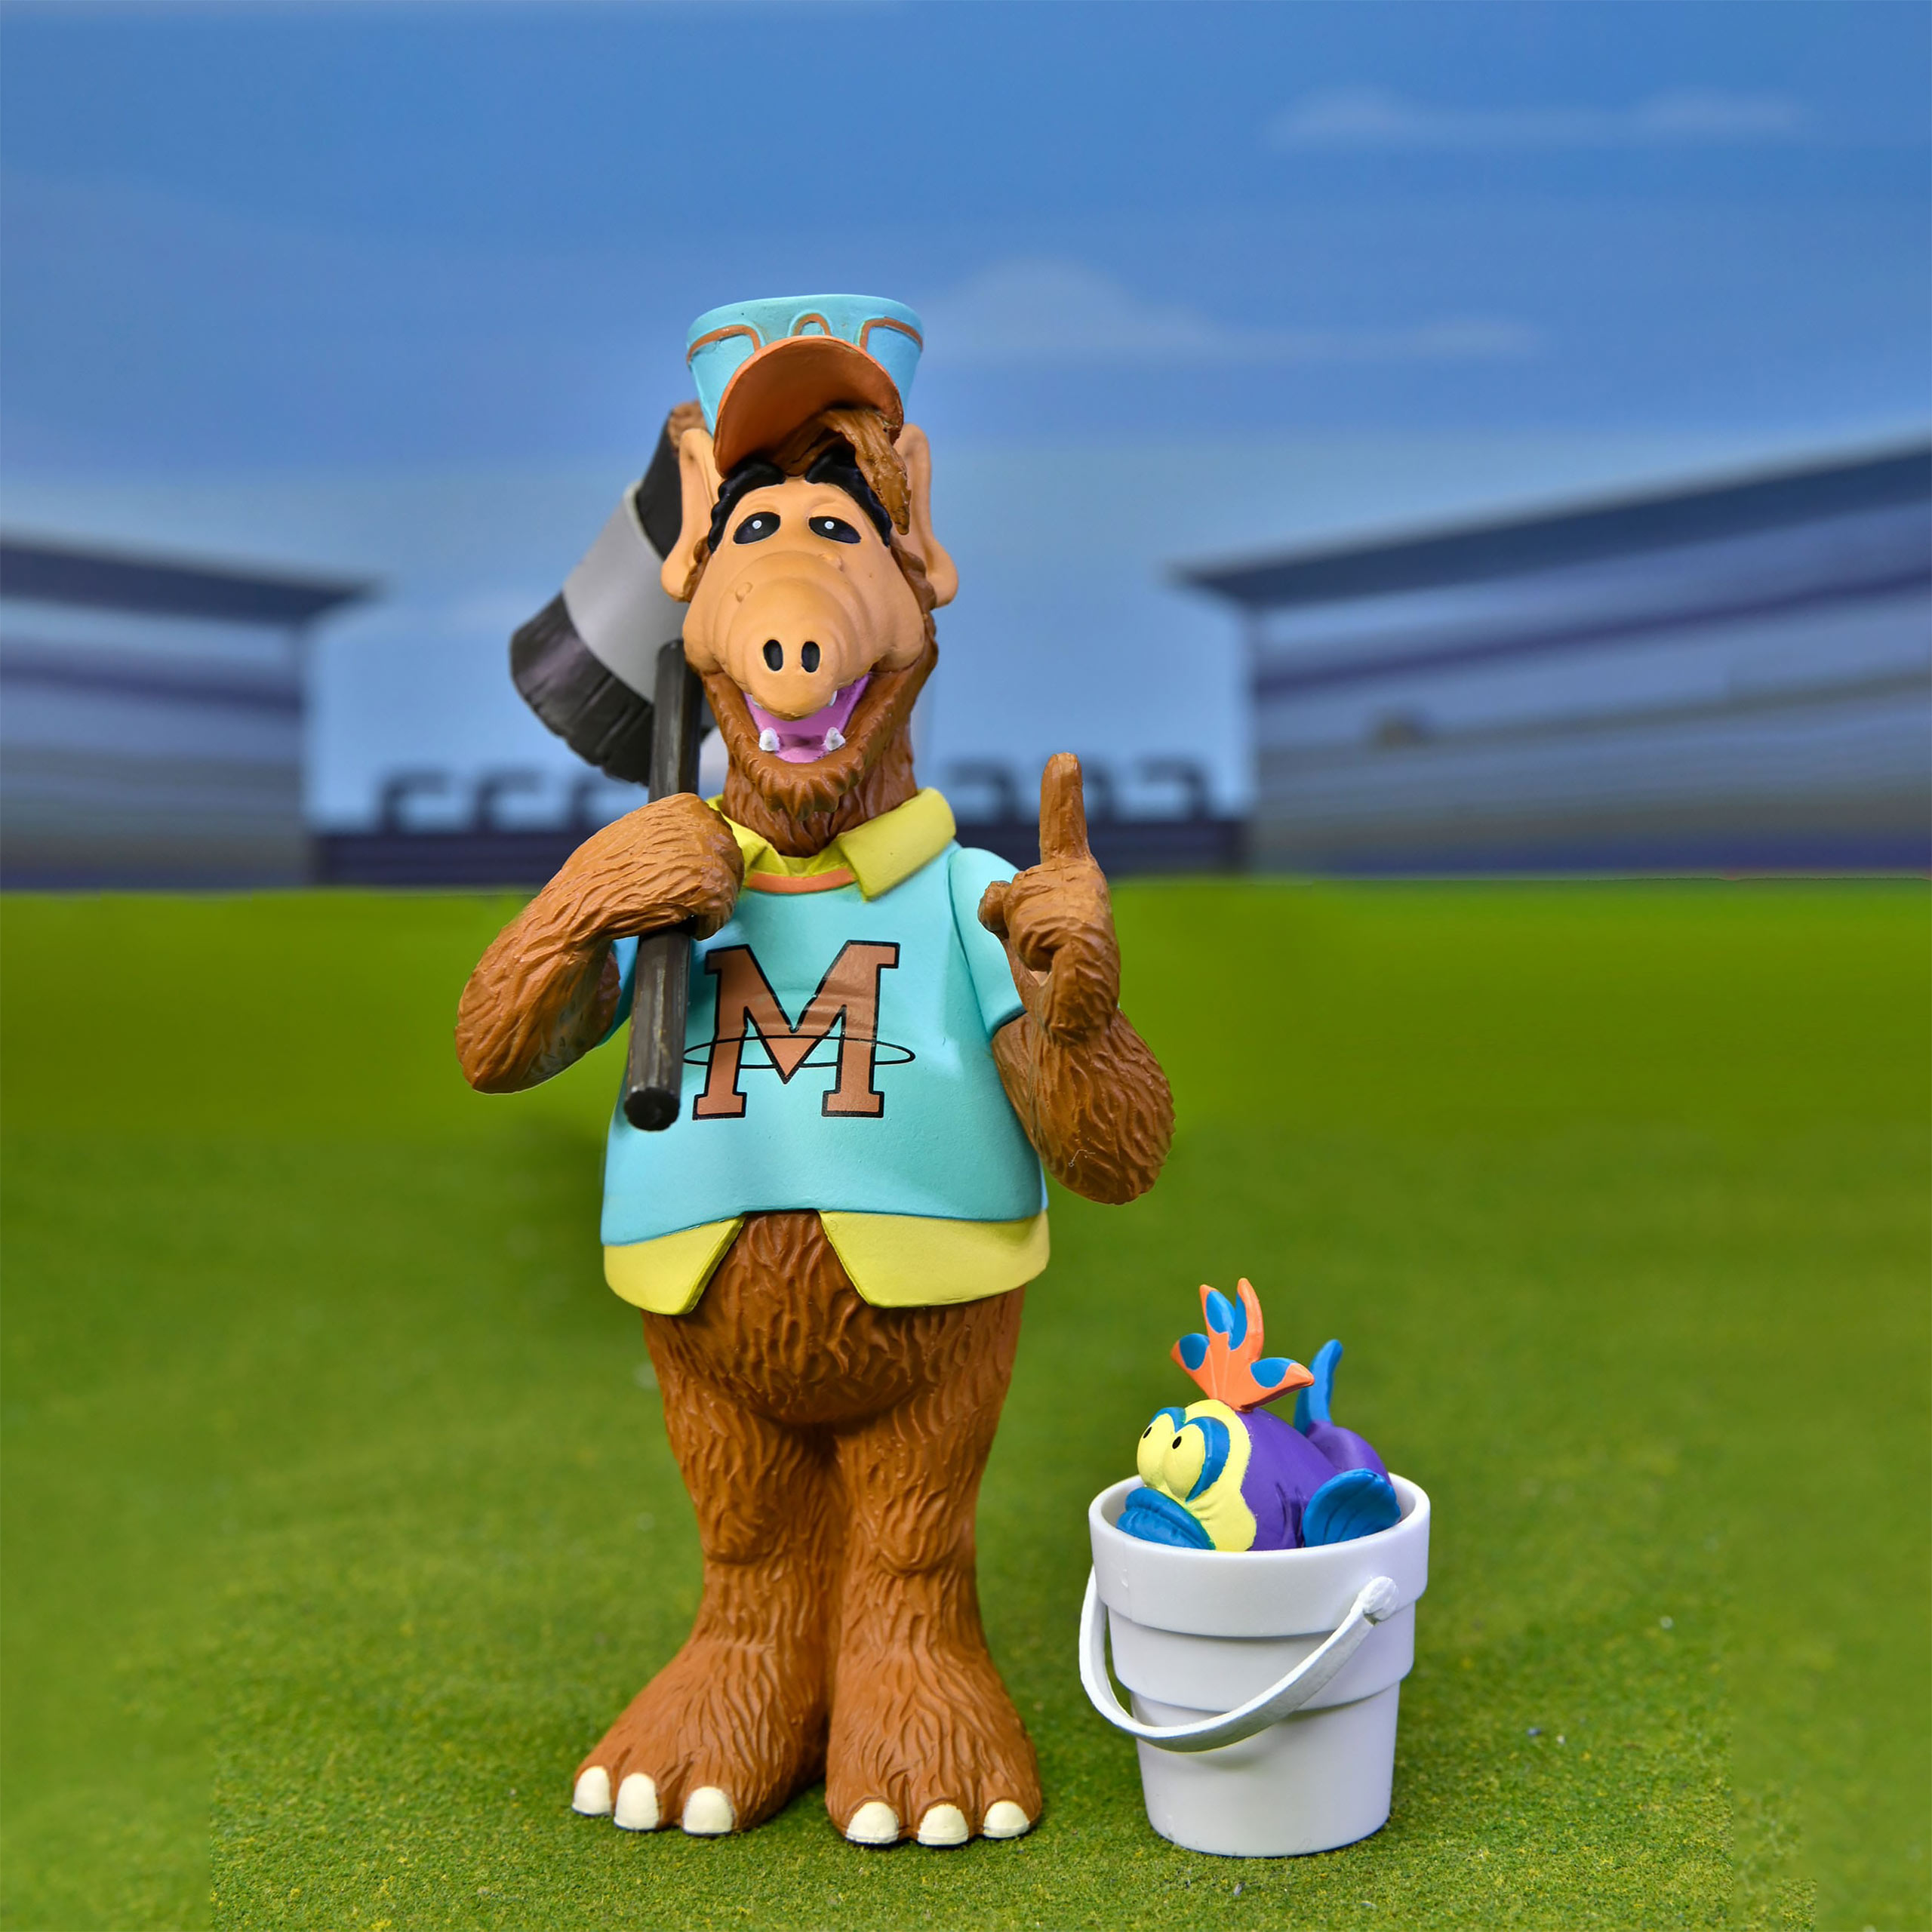 Alf with Baseball Bat Figure